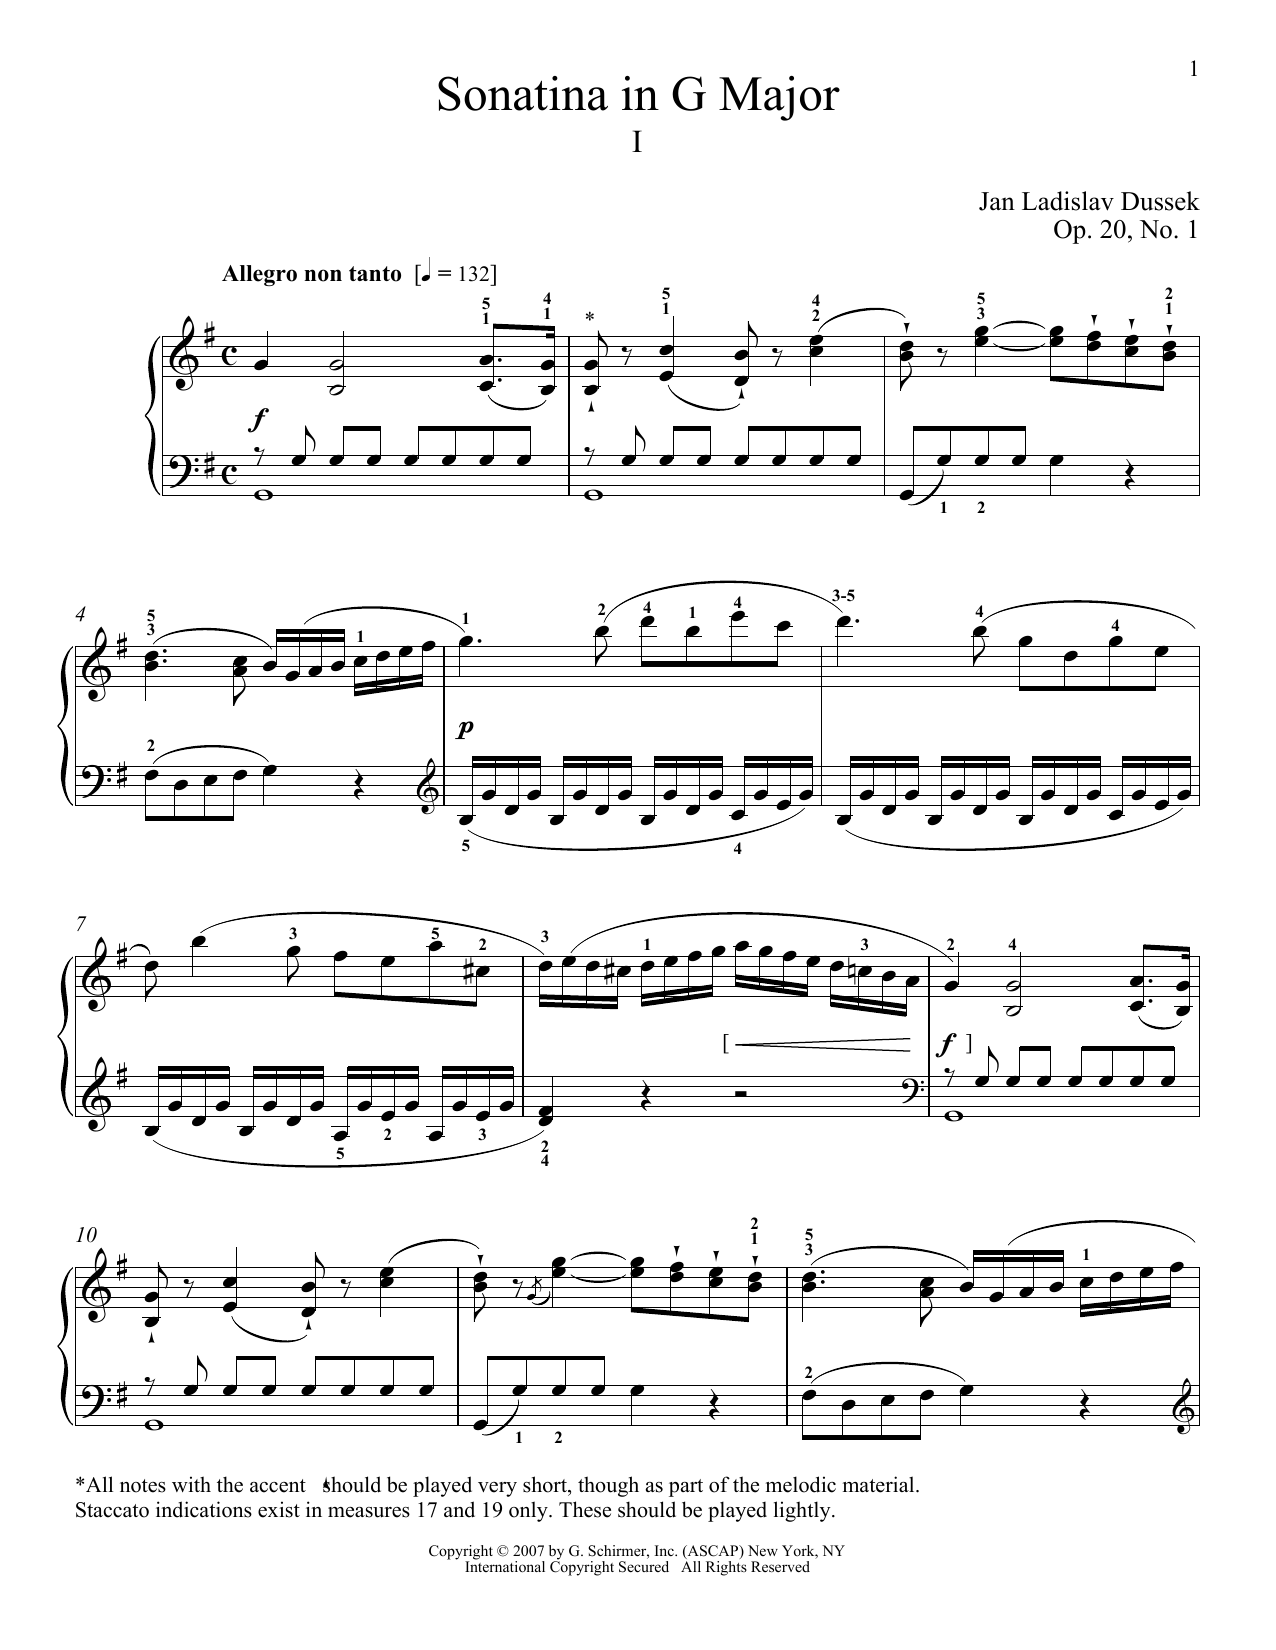 Jan Ladislaw Dussek Sonatina In G Major, Op. 20, No. 1 Sheet Music Notes & Chords for Piano - Download or Print PDF